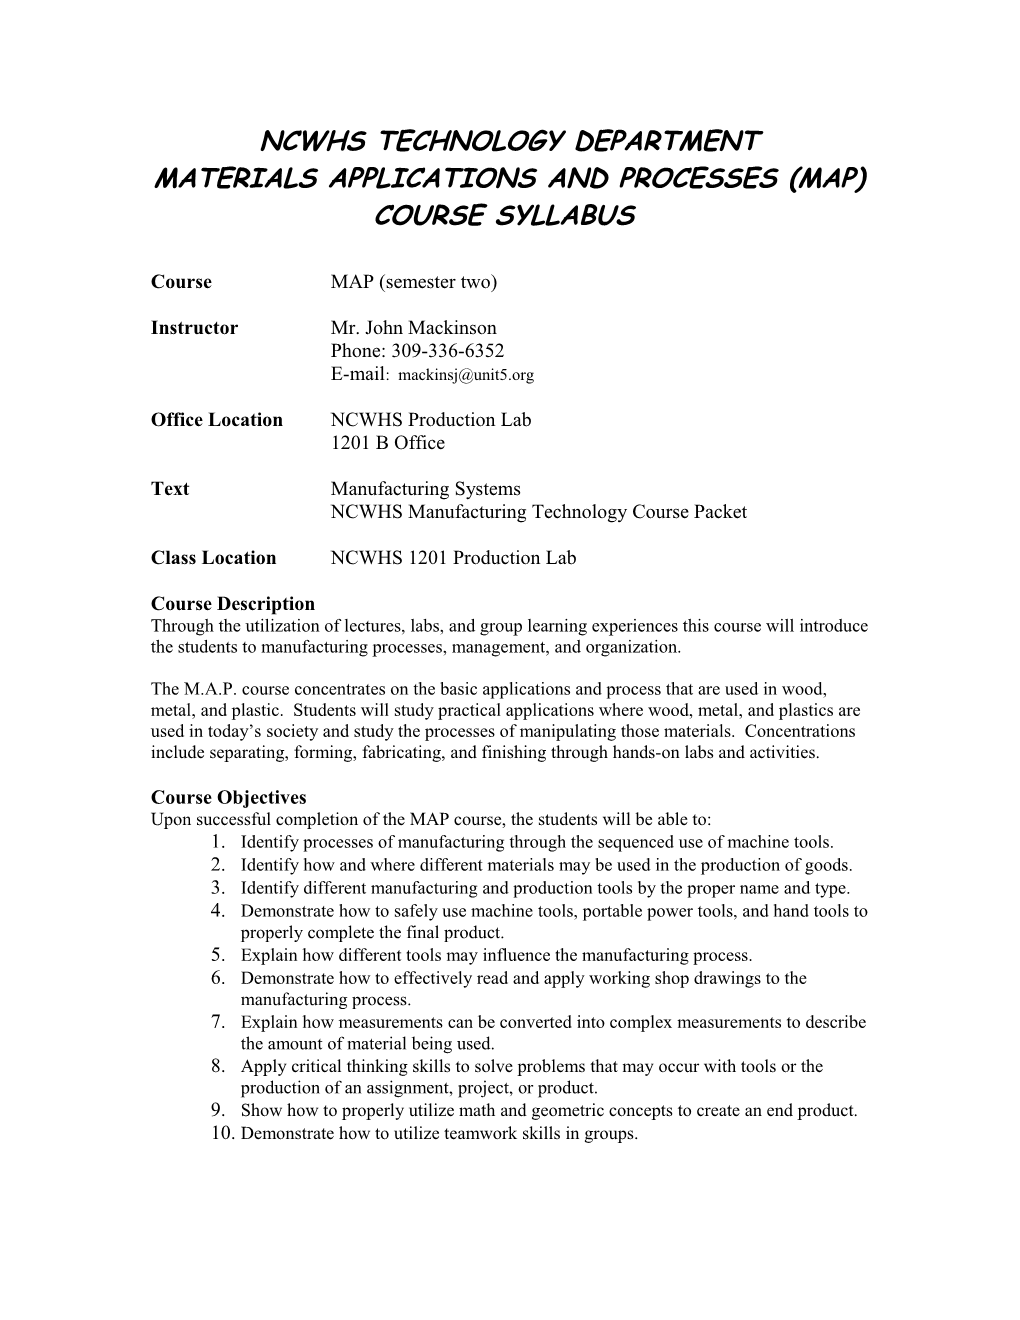 Materials Applications and Processes